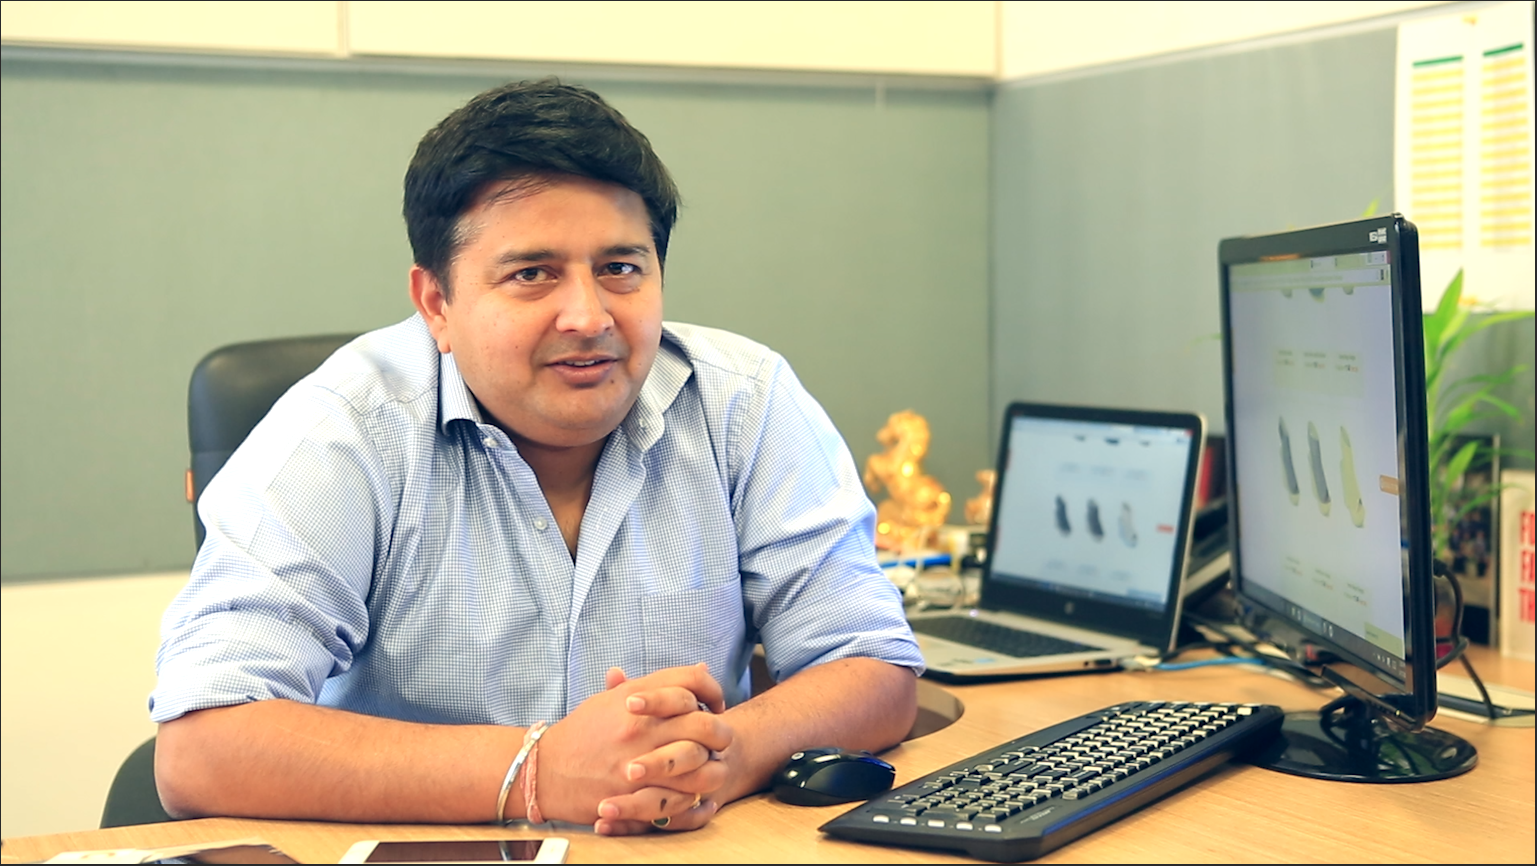 Yepme founder and CEO Vivek Gaur